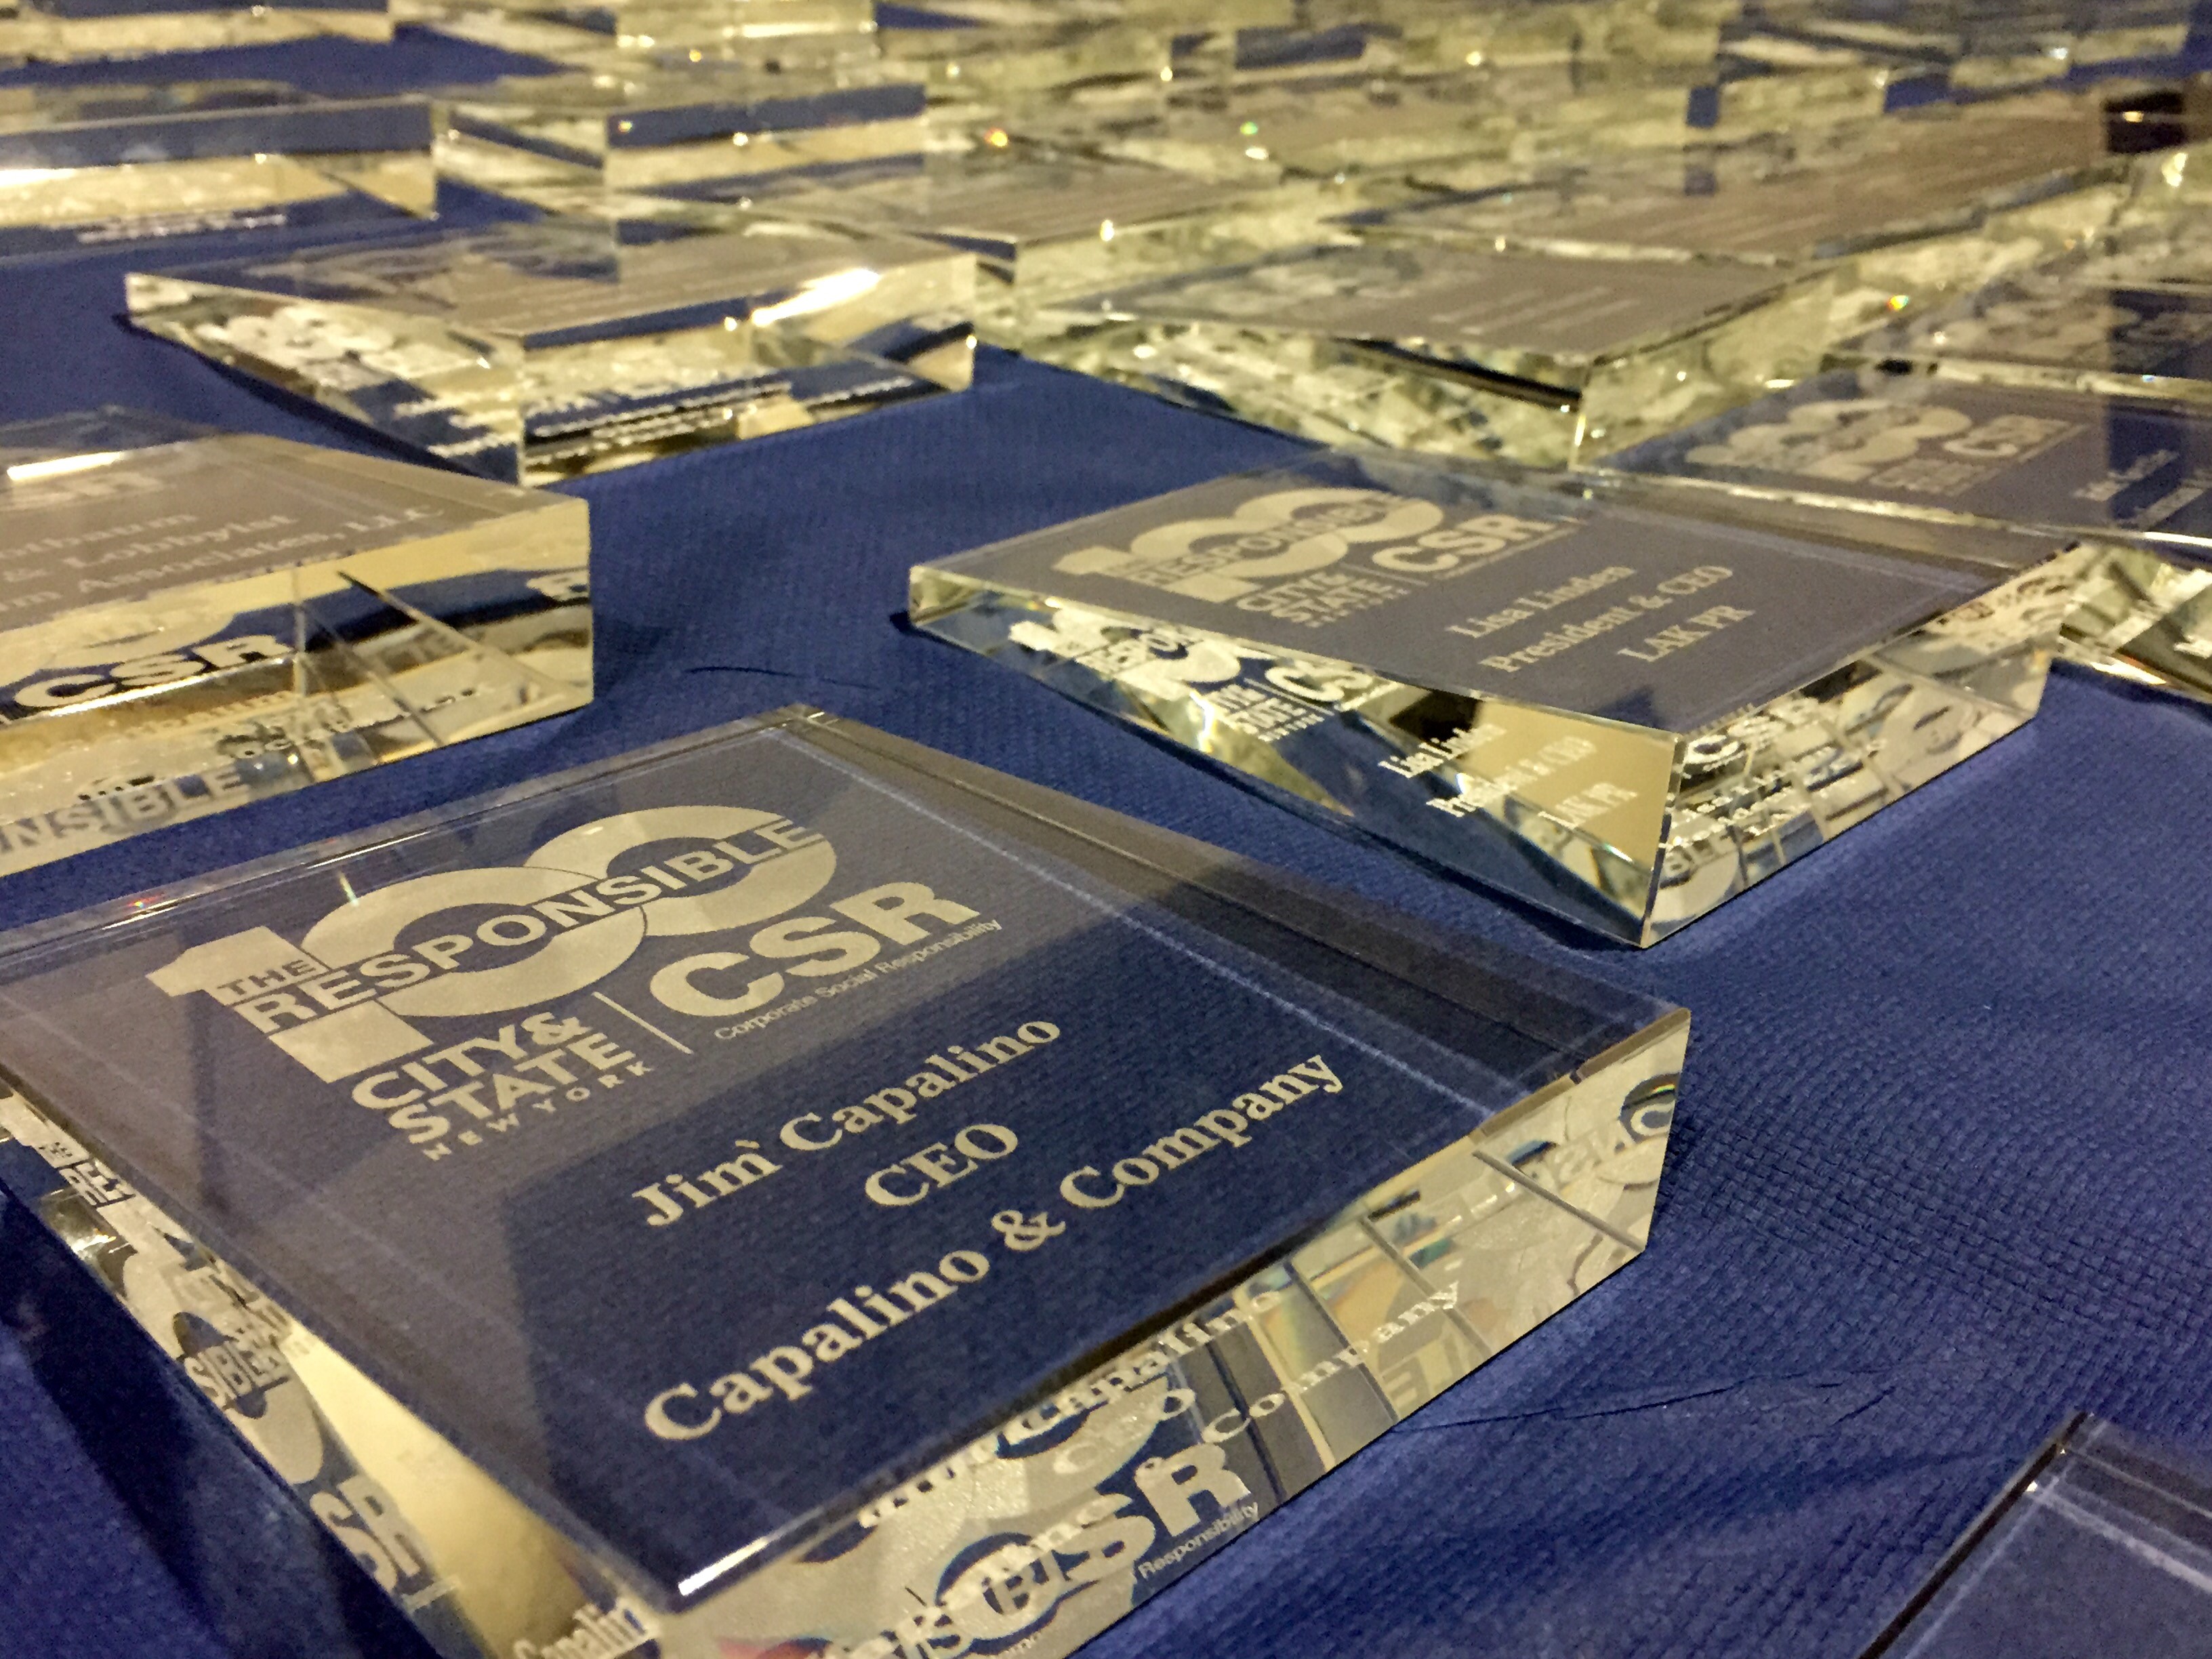 Jim Capalino award at City&State Responsible 100 awards for corporate social responsibility csr 